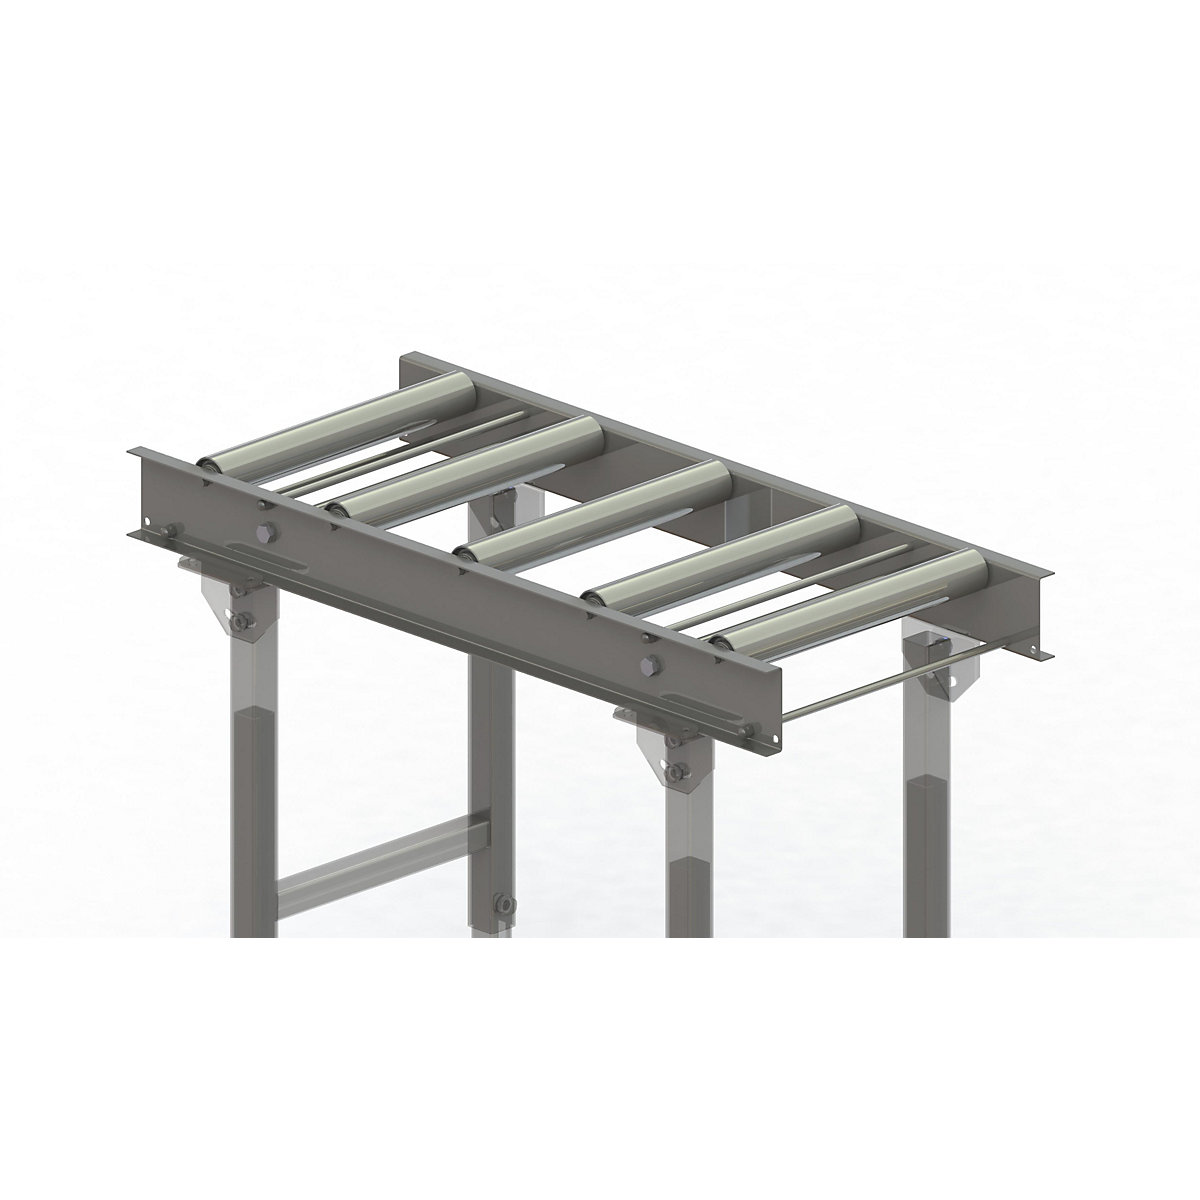 Gura – Roller conveyor, steel frame with zinc plated steel rollers, track width 400 mm, distance between axles 200 mm, length 1 m